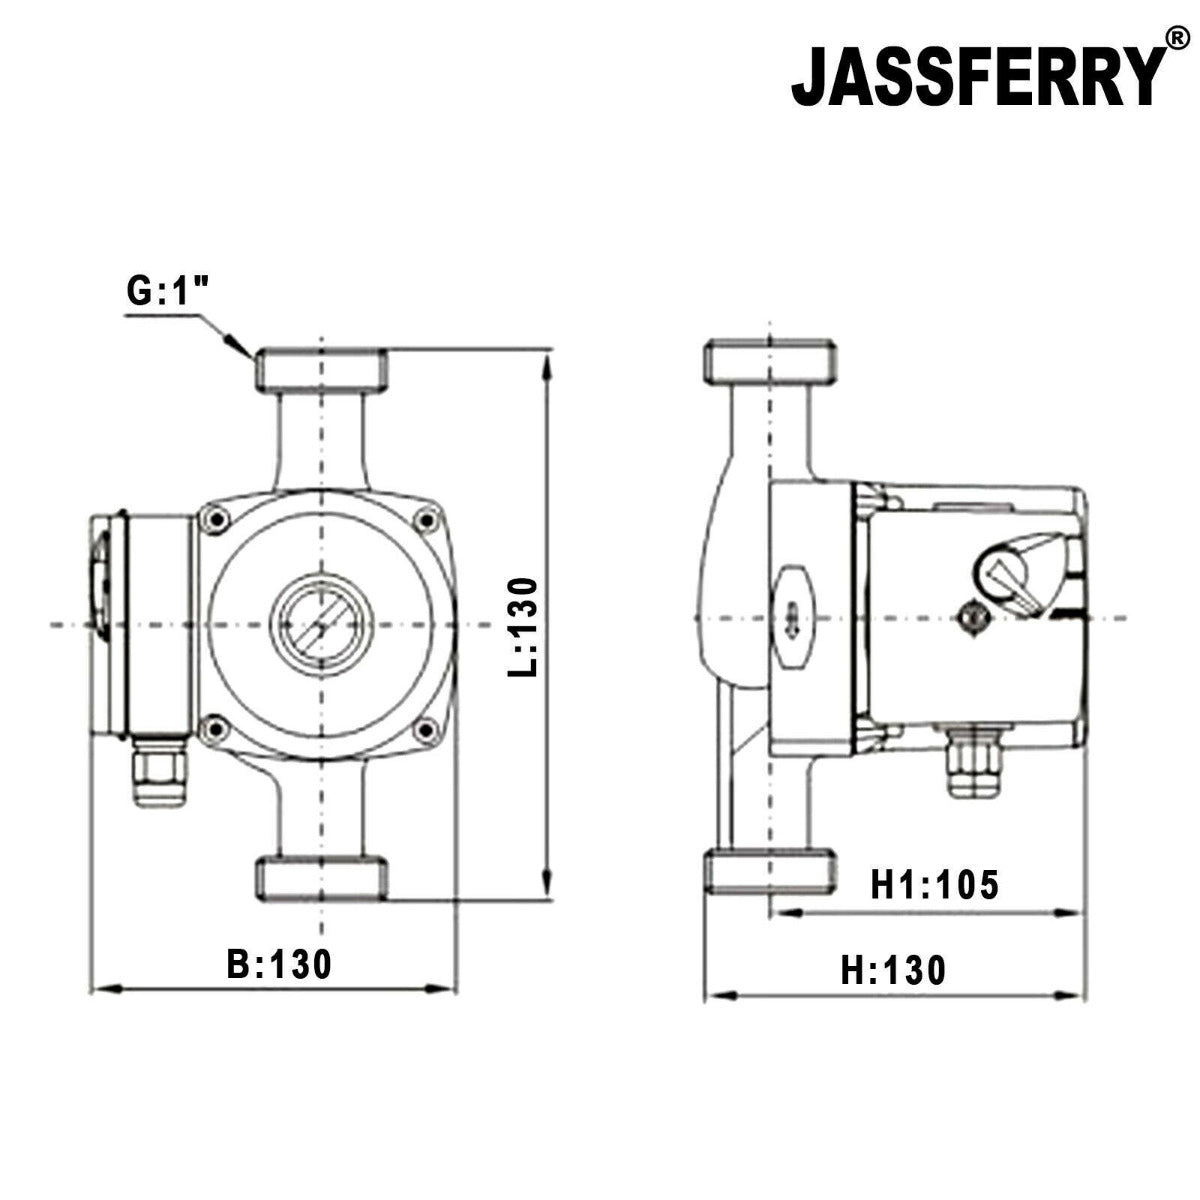 JassferryJASSFERRY New Heating Pump Hot Water Circulating Central System KBD20Heating Pumps